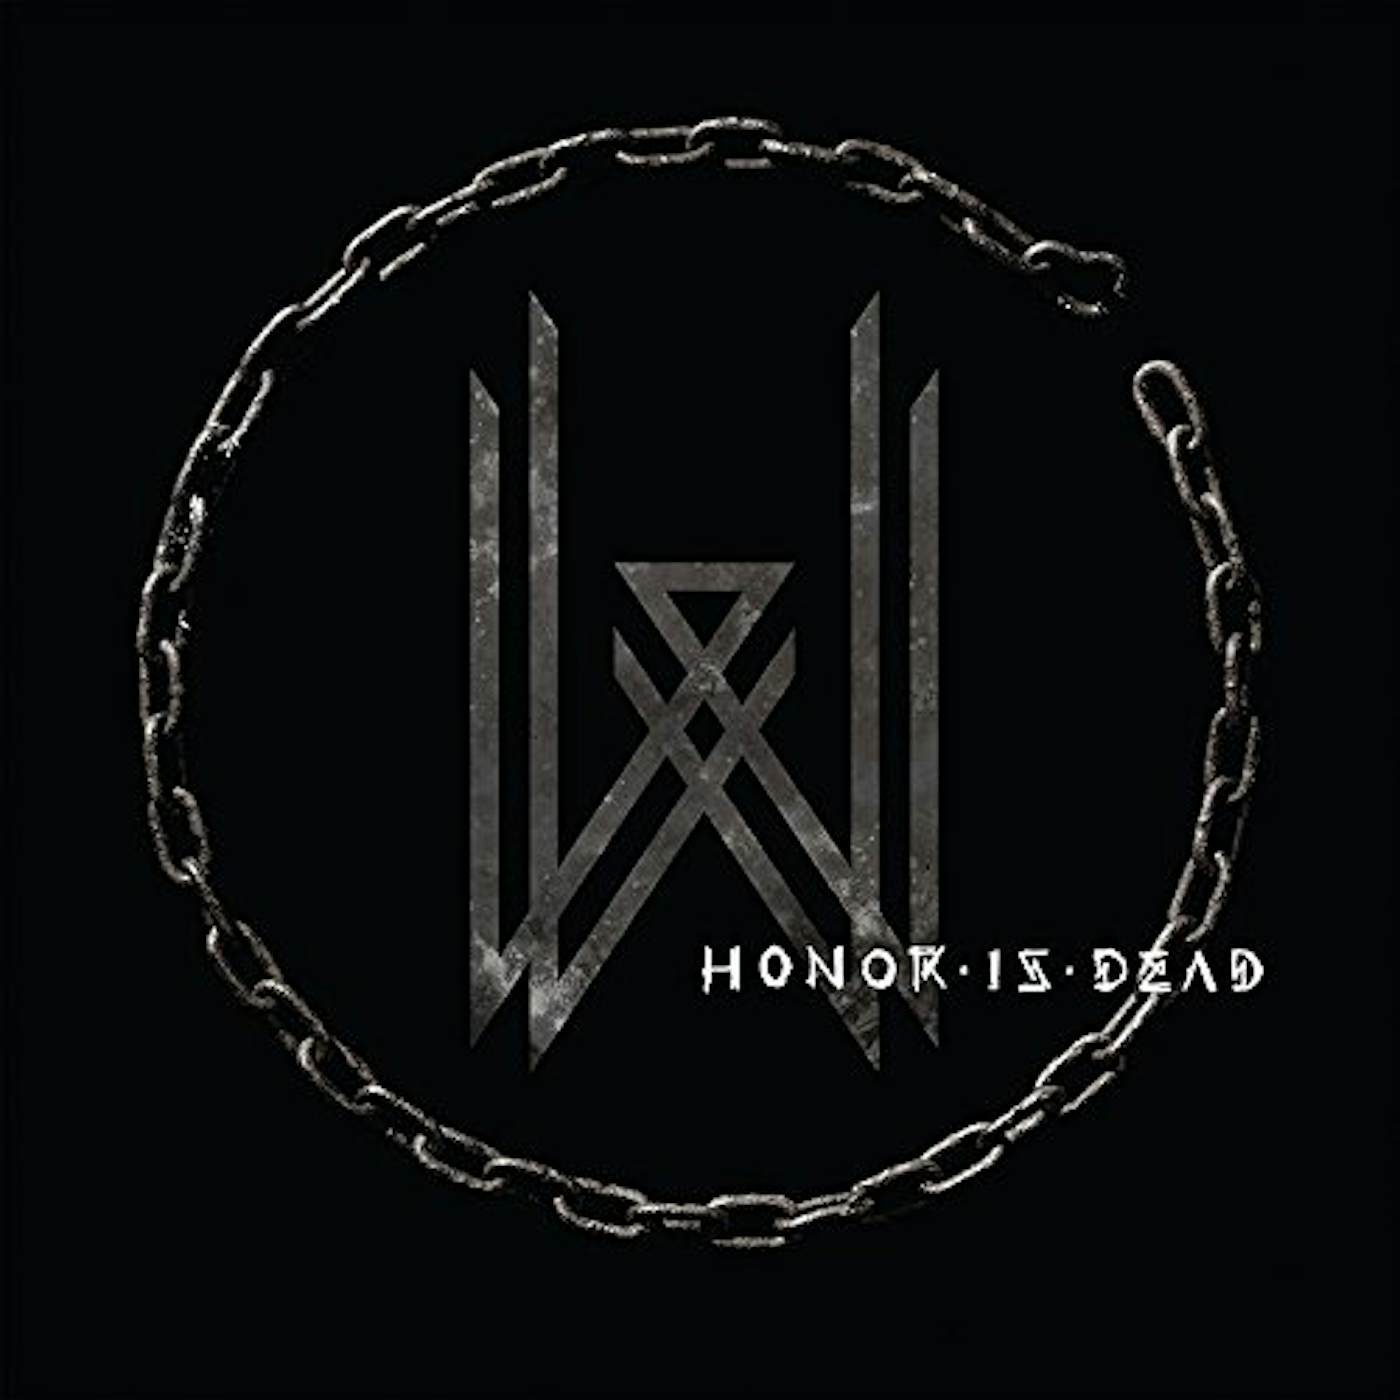 Wovenwar Honor Is Dead Vinyl Record